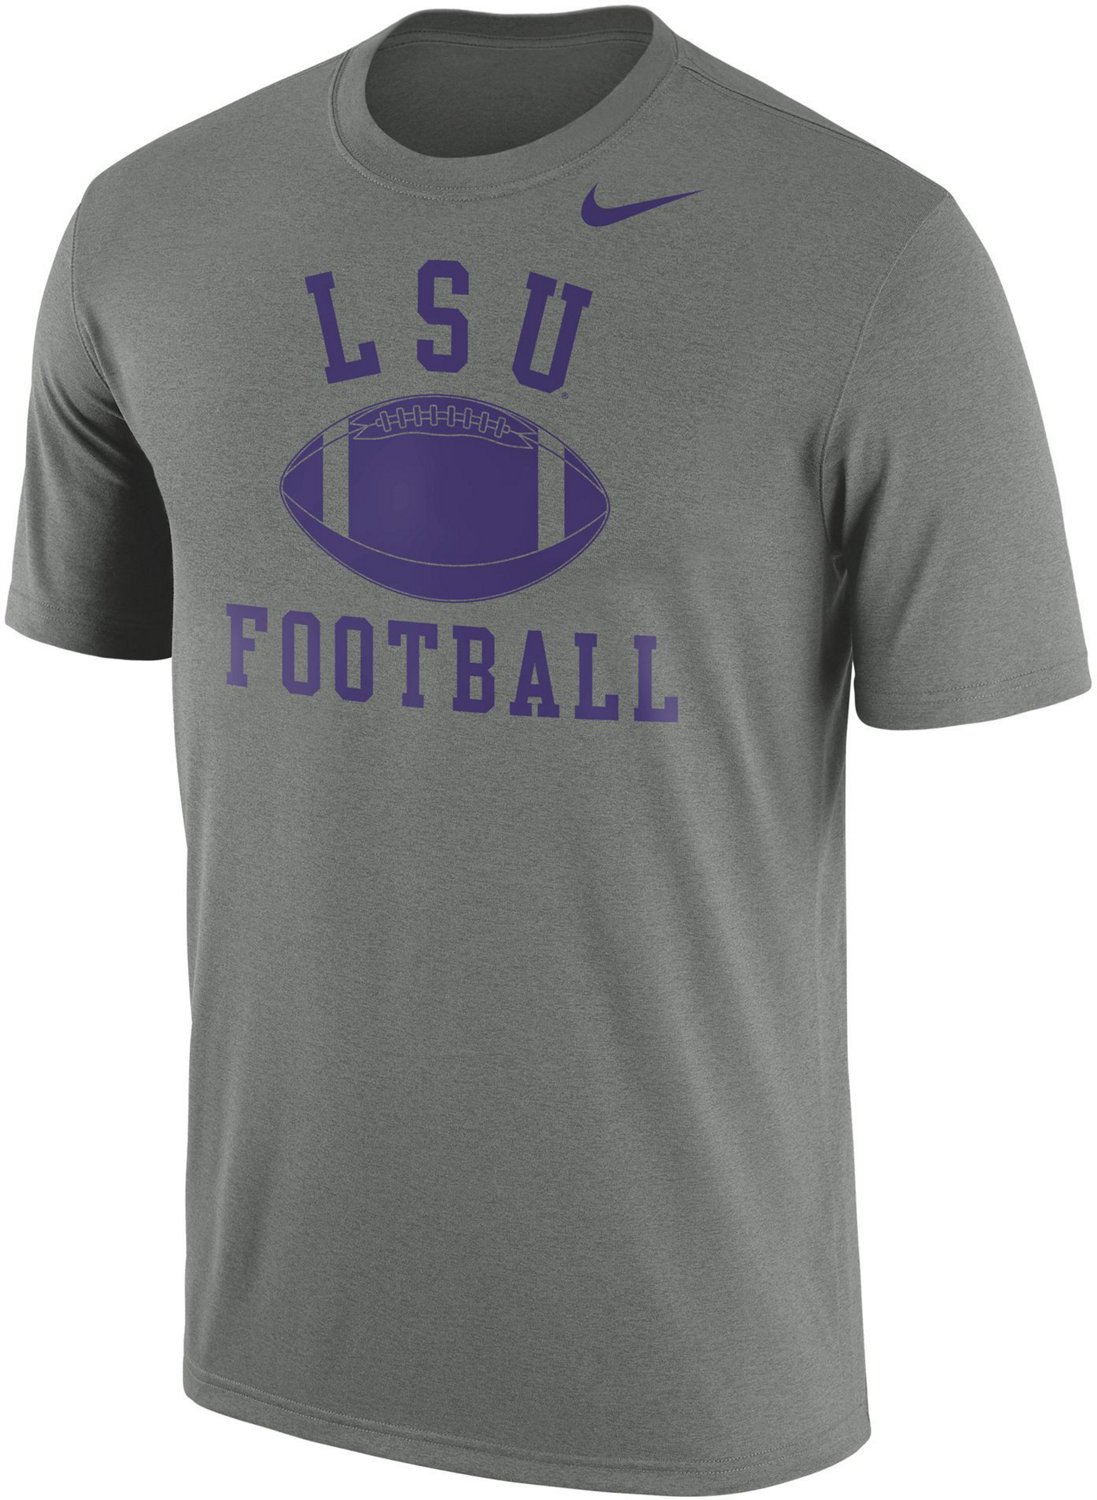 Nike Men's Louisiana State University Football T-shirt | Academy